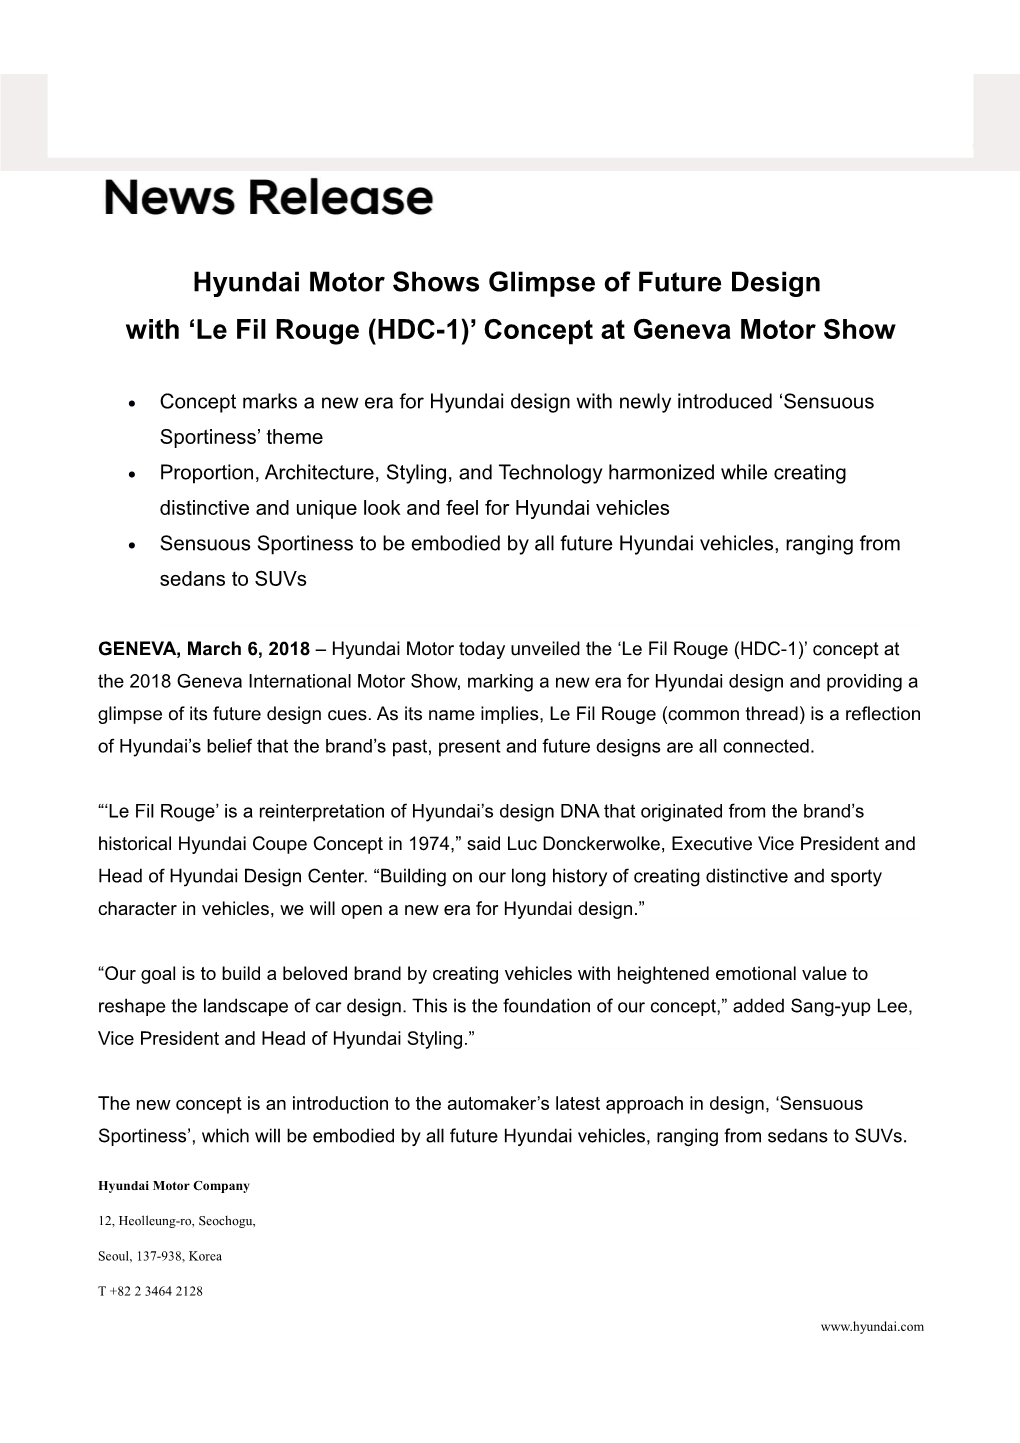 Hyundai Motor Shows Glimpse of Future Design